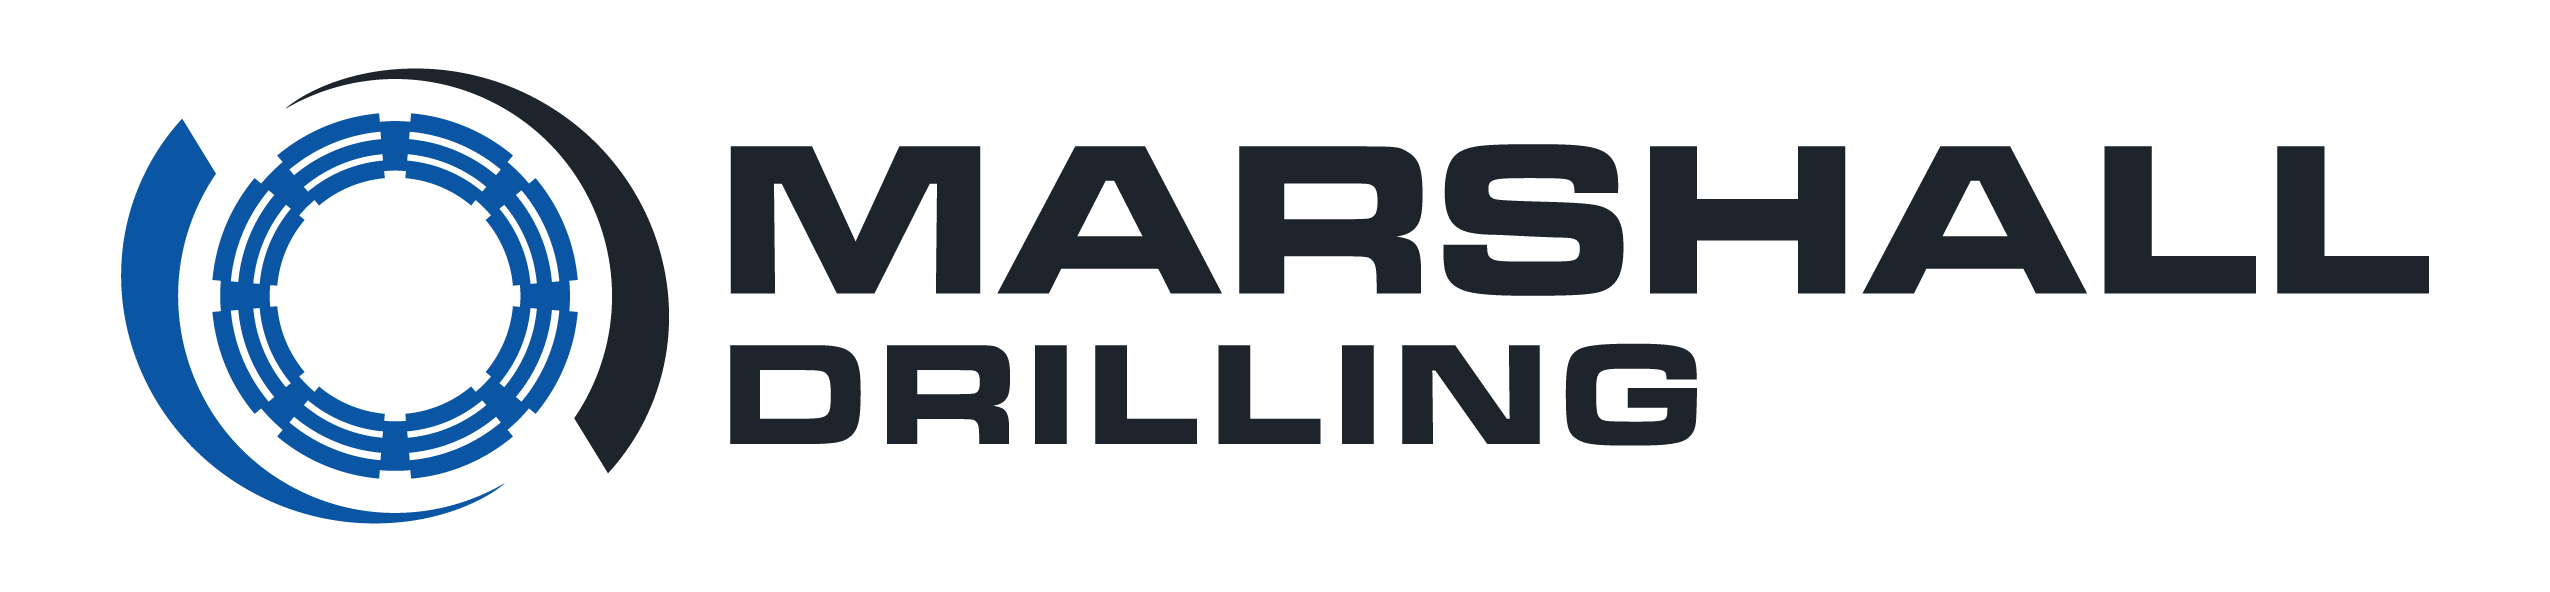 Marshall Drilling Ltd